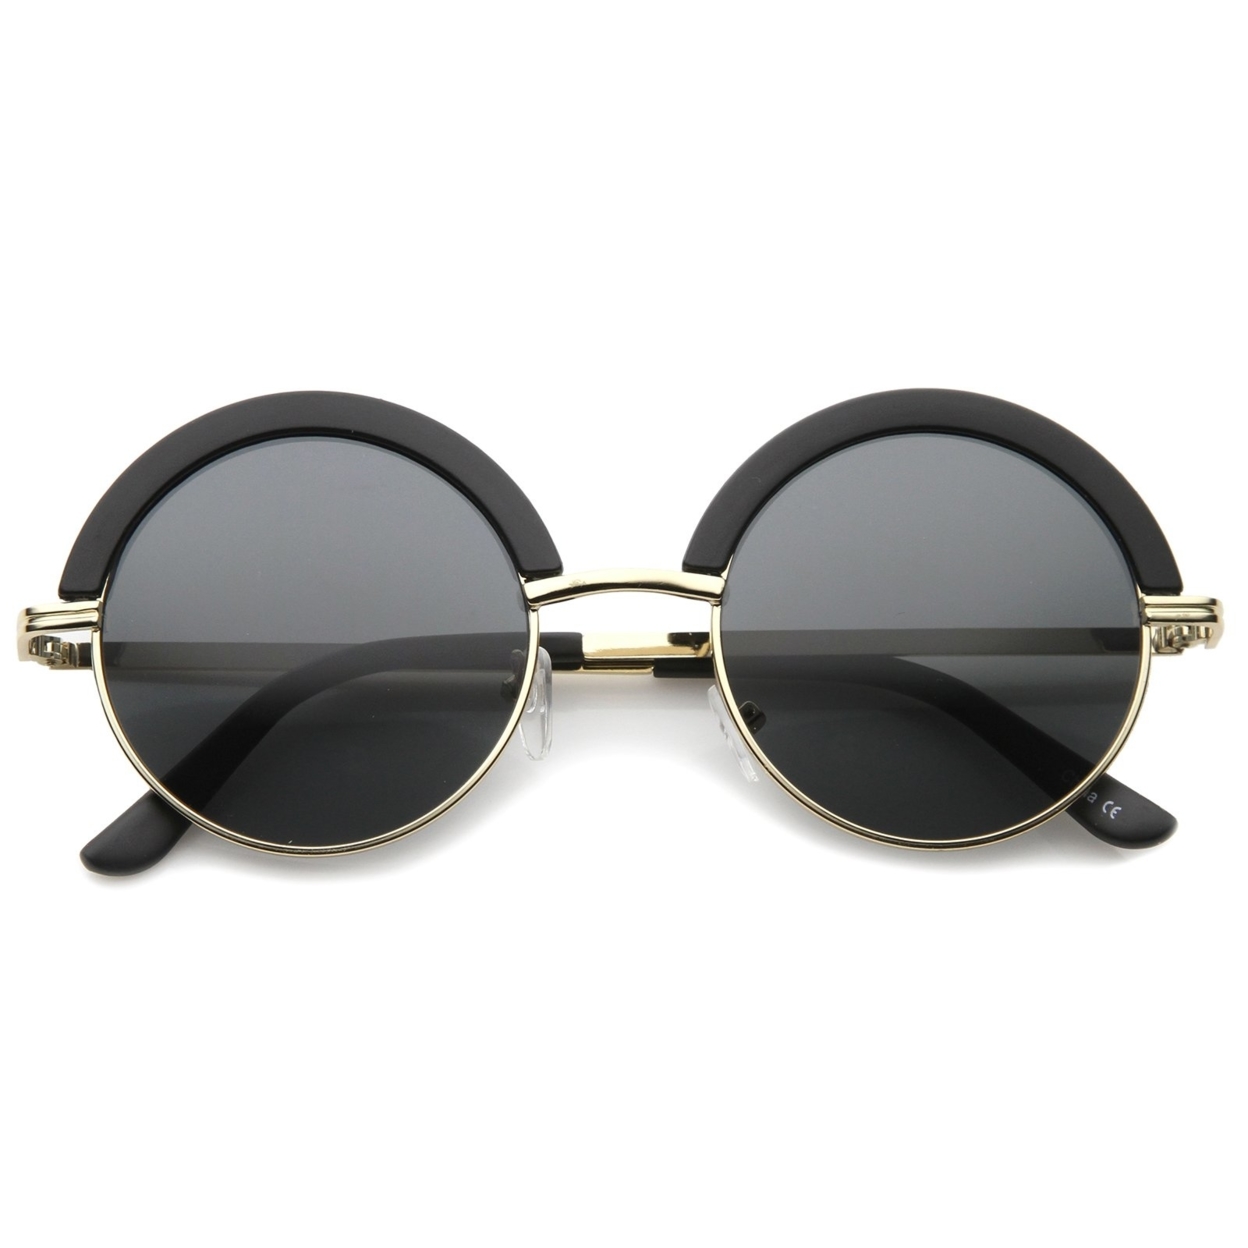 Mod Fashion Oversize Half-Frame Brow Eyelid Round Sunglasses 50mm - Shiny Tortoise-Gold / Brown